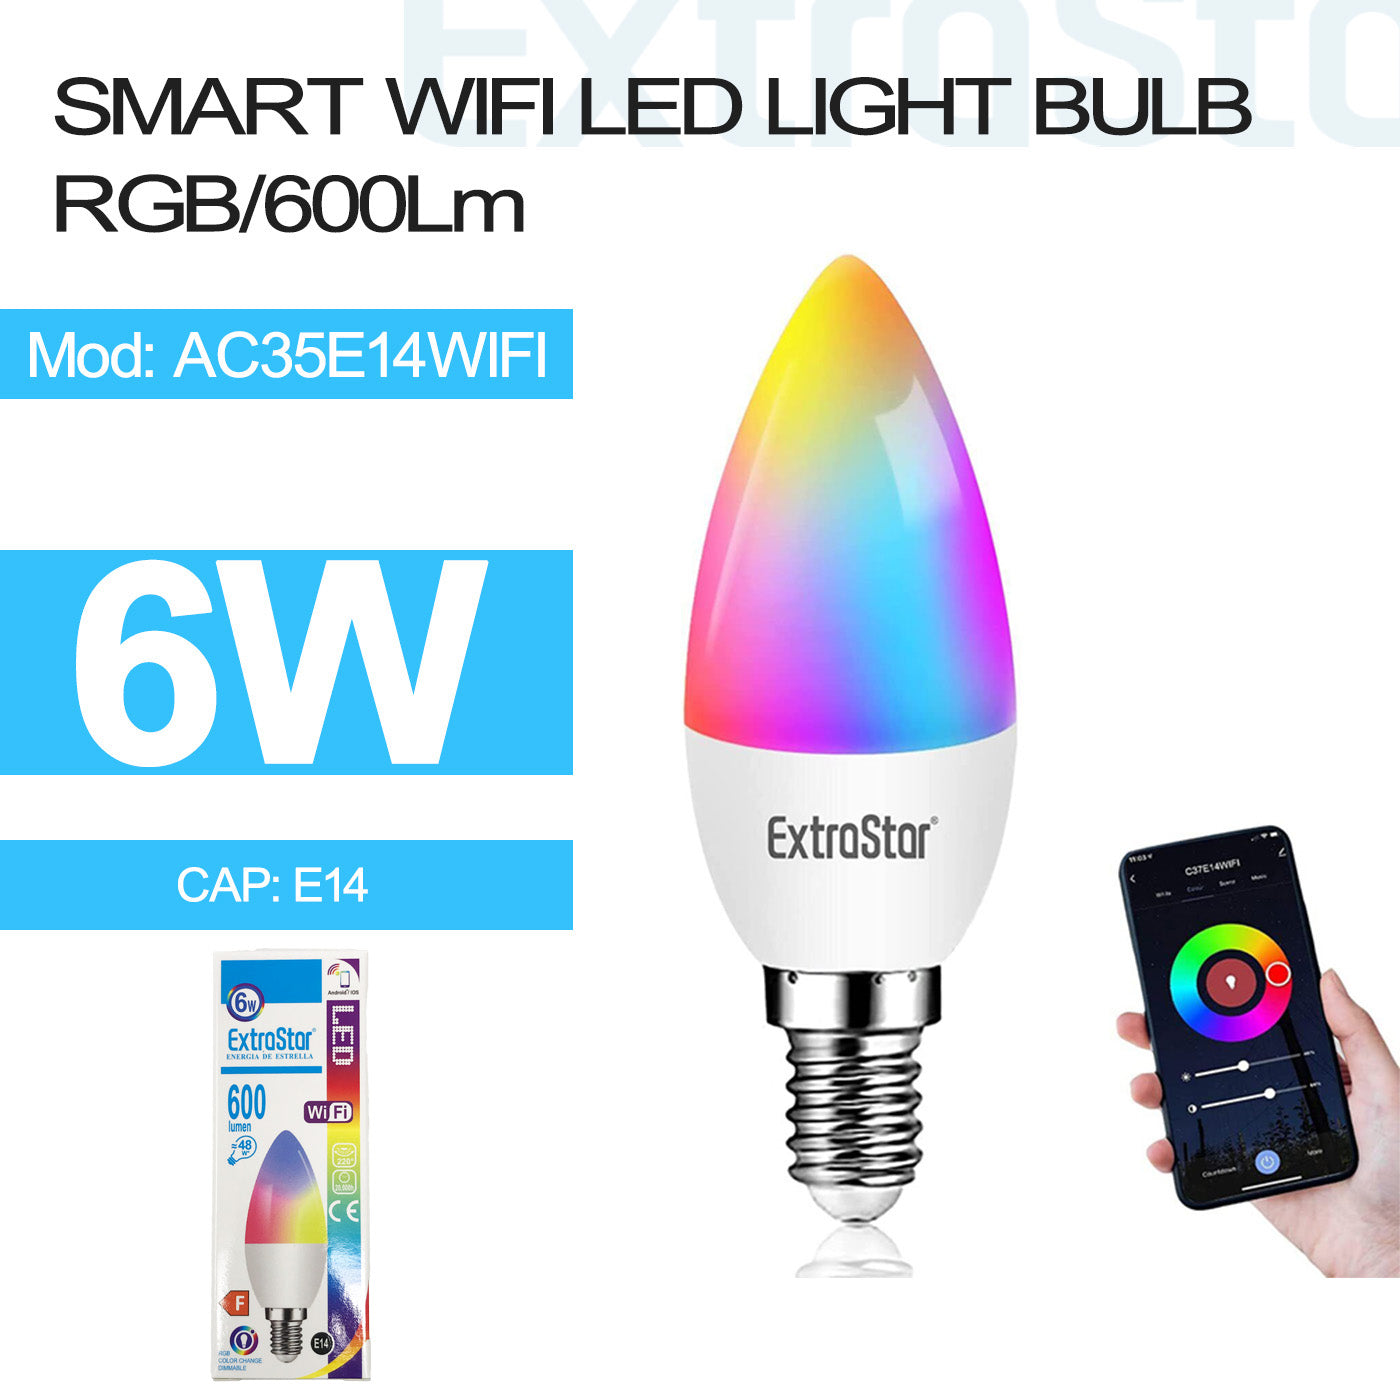 6W Smart Wifi LED Candle Light Bulb RGB E14 (AC35E14WIFI)